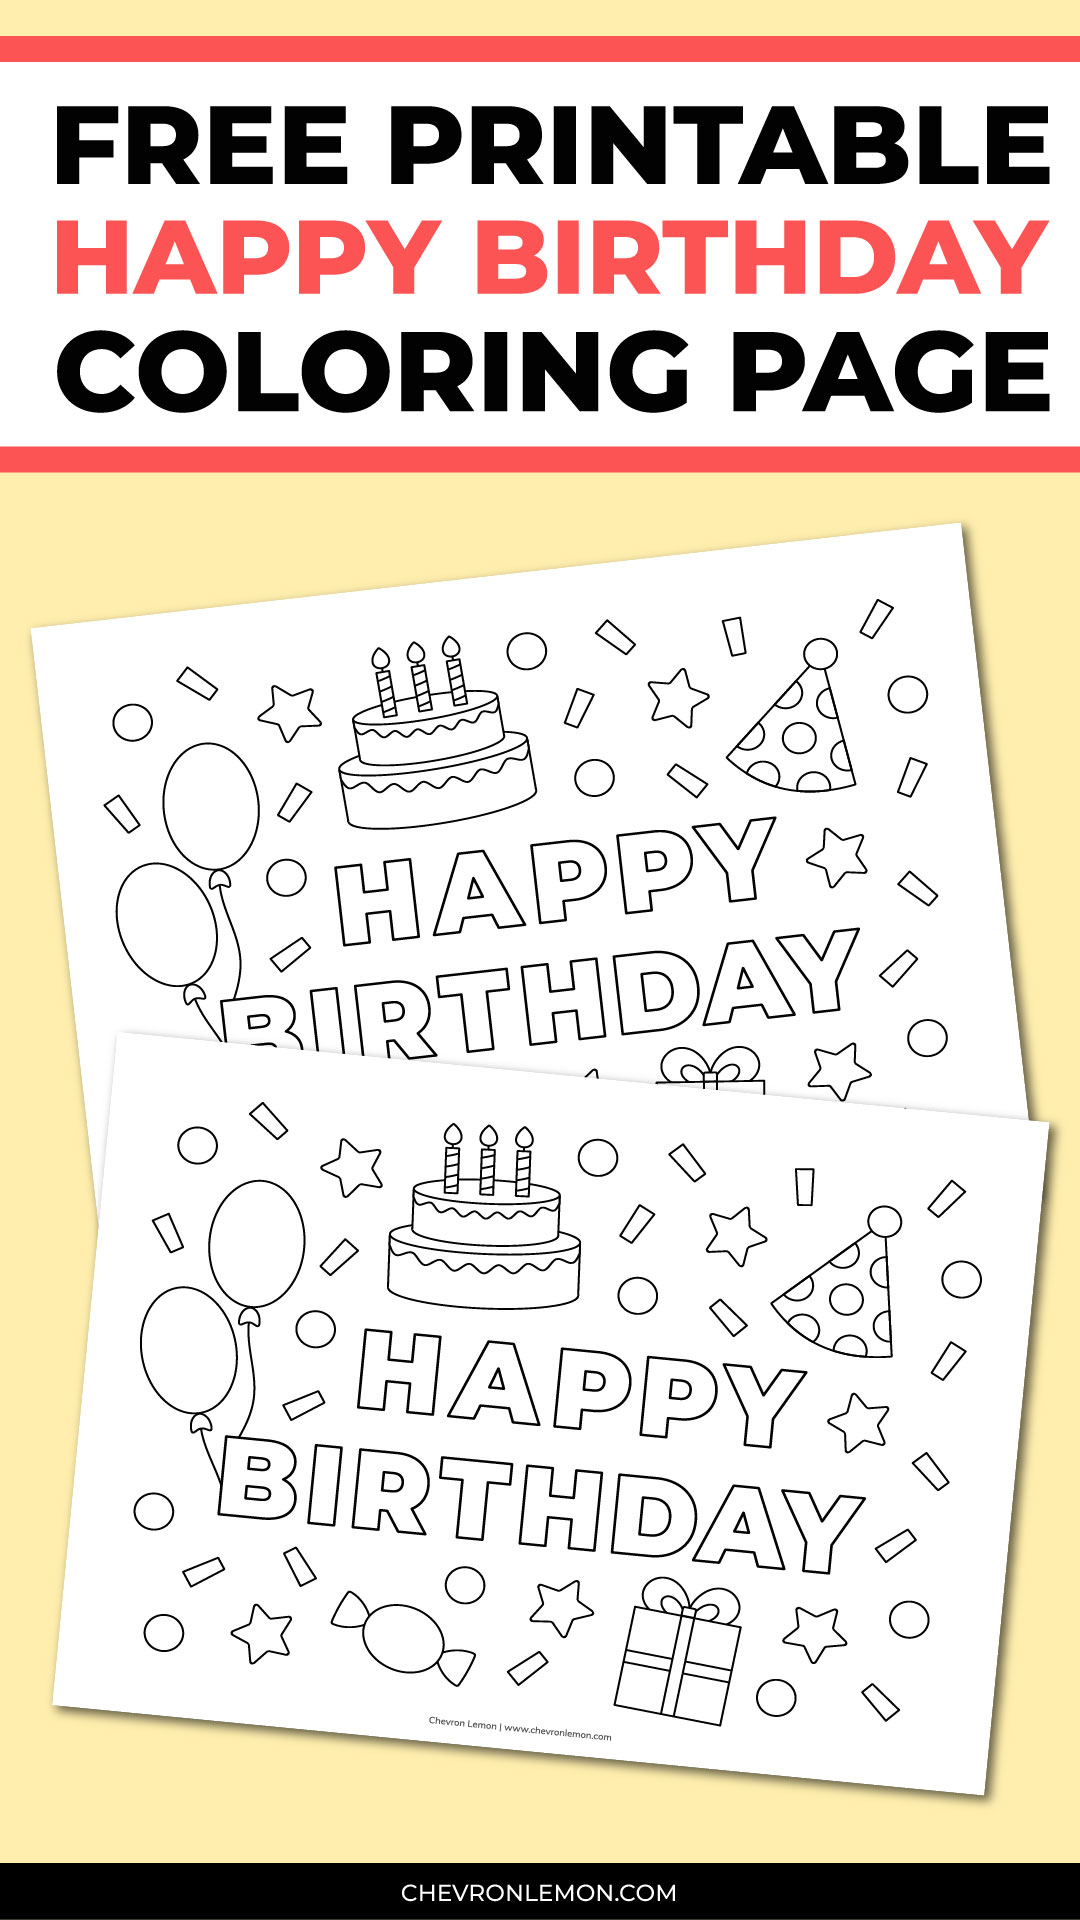 Printable Happy Birthday coloring page